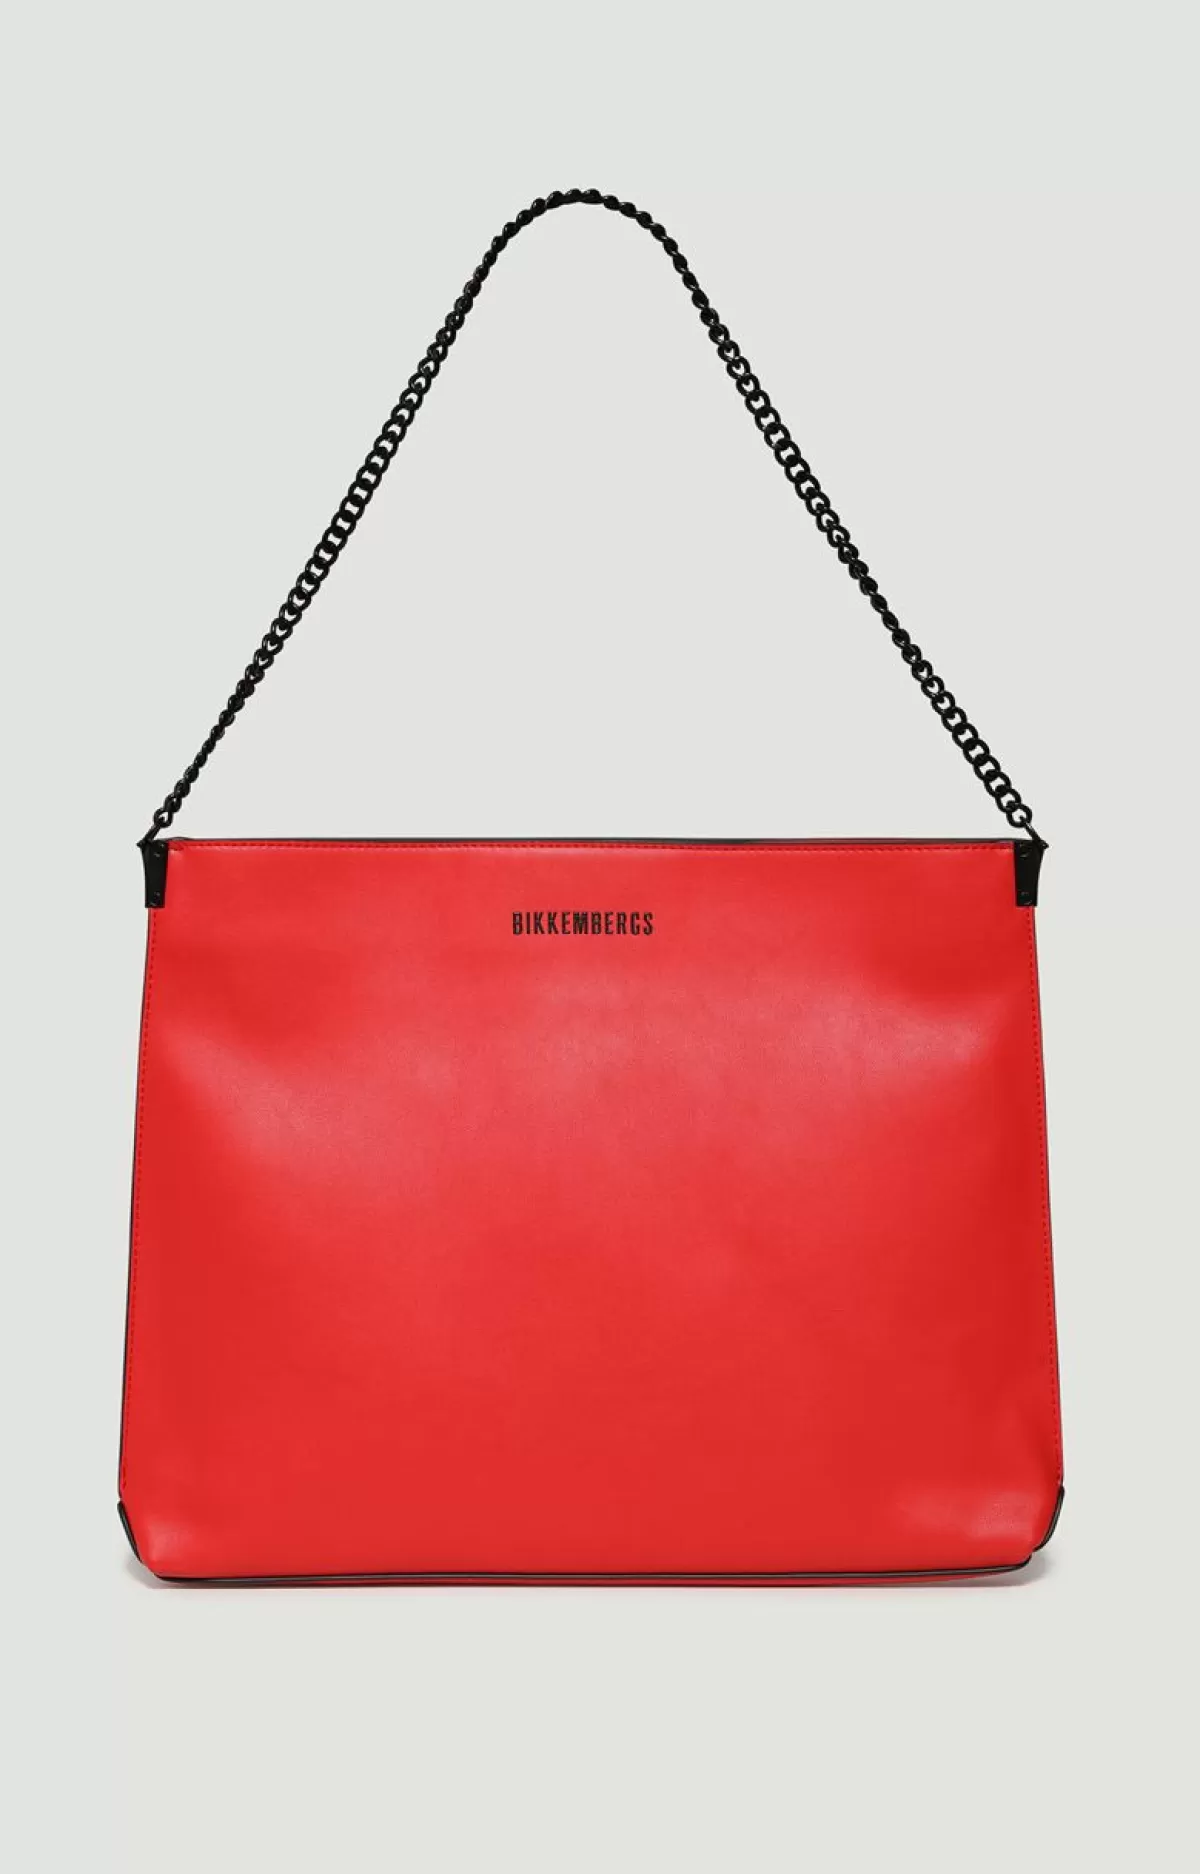 Bikkembergs Women'S Shoulder Bag - Bkk Star Red Discount